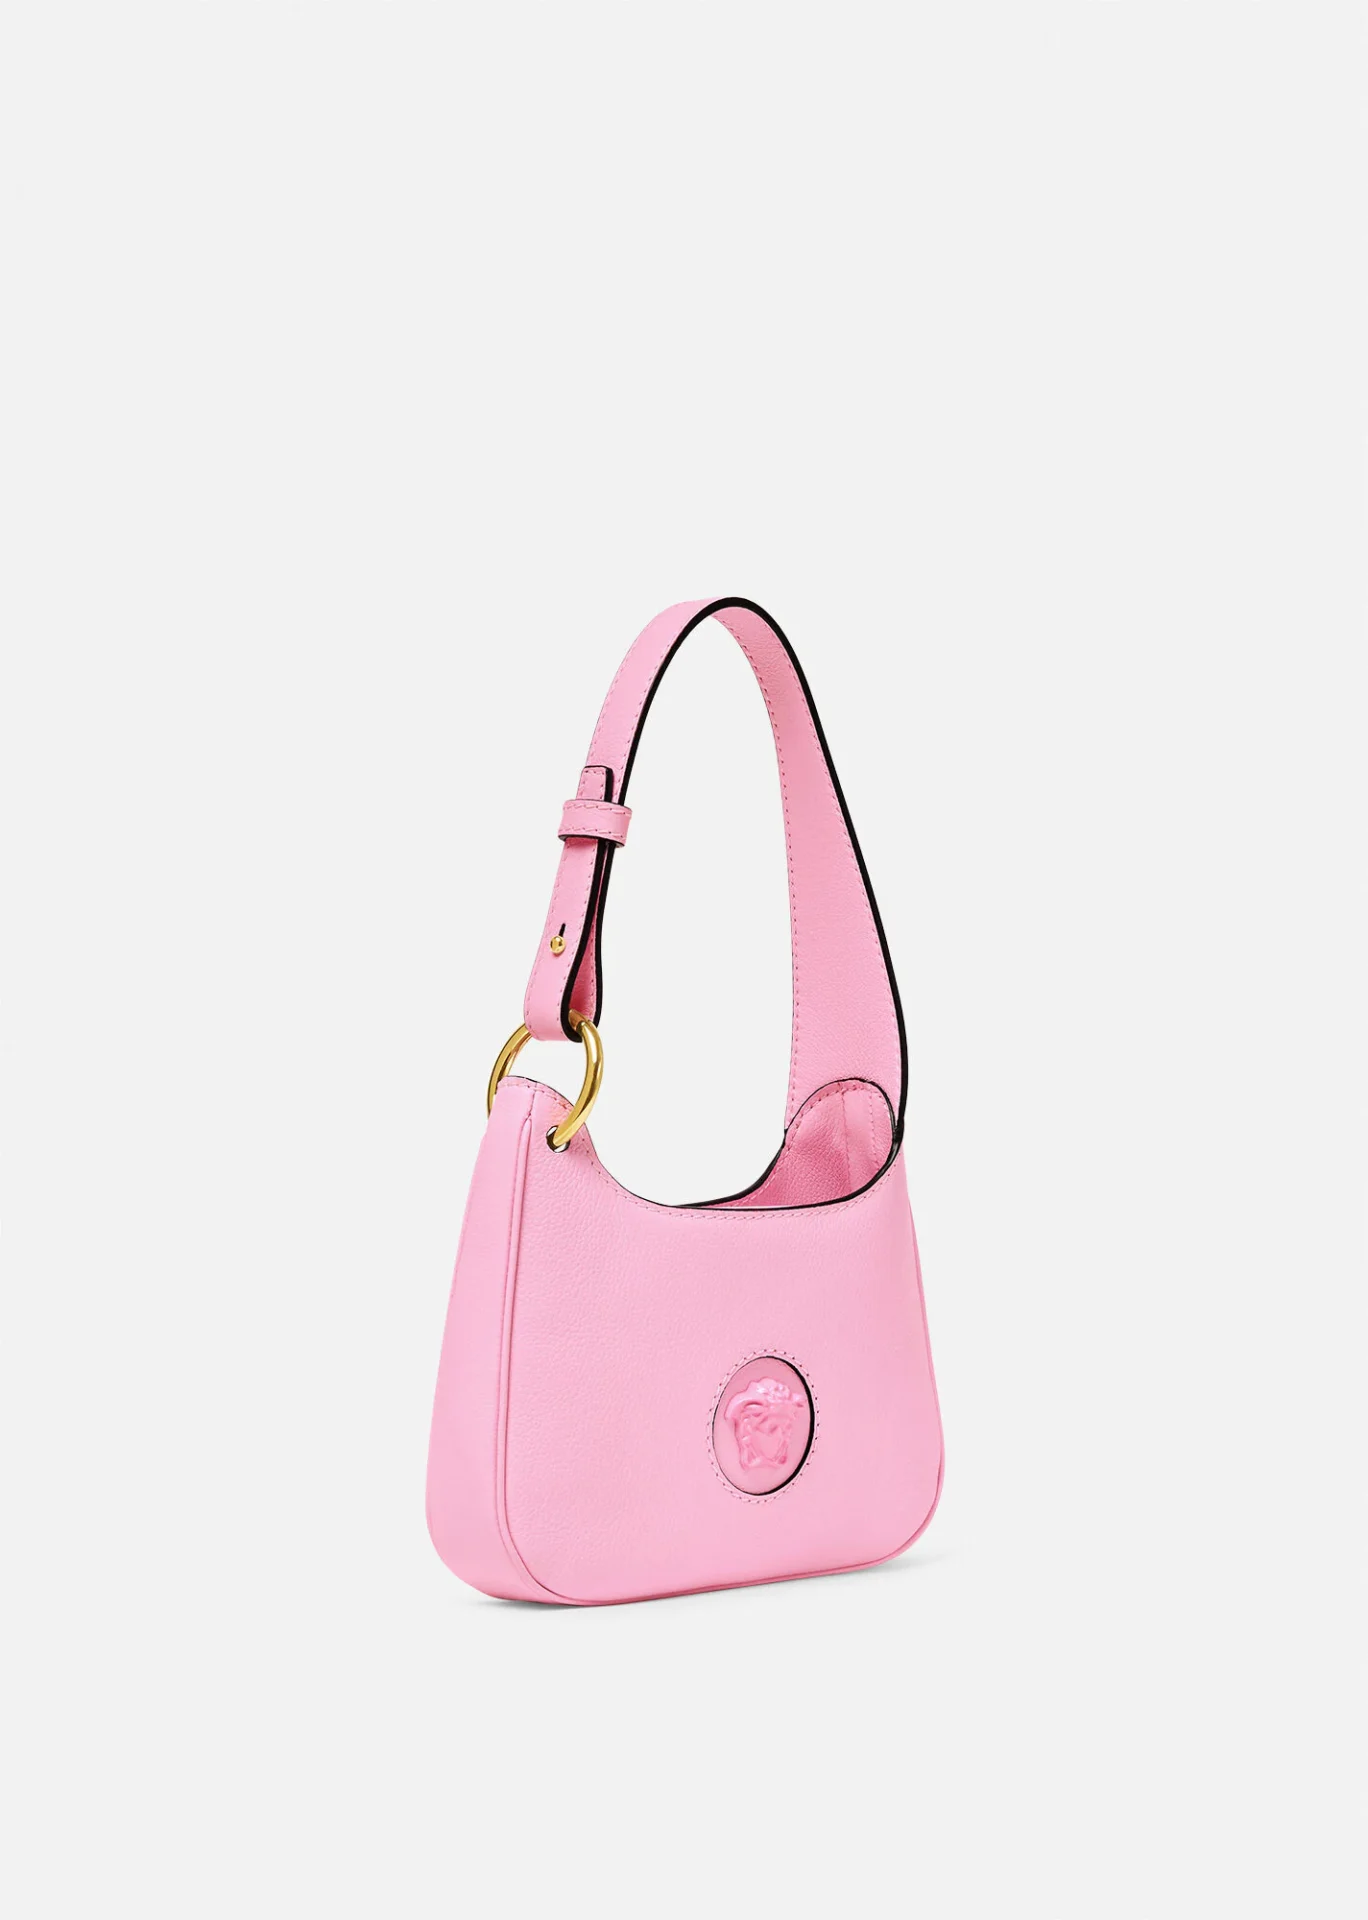 Versace Women's La Medusa Mini Hobo Bag in - Pink - Hobo Bags